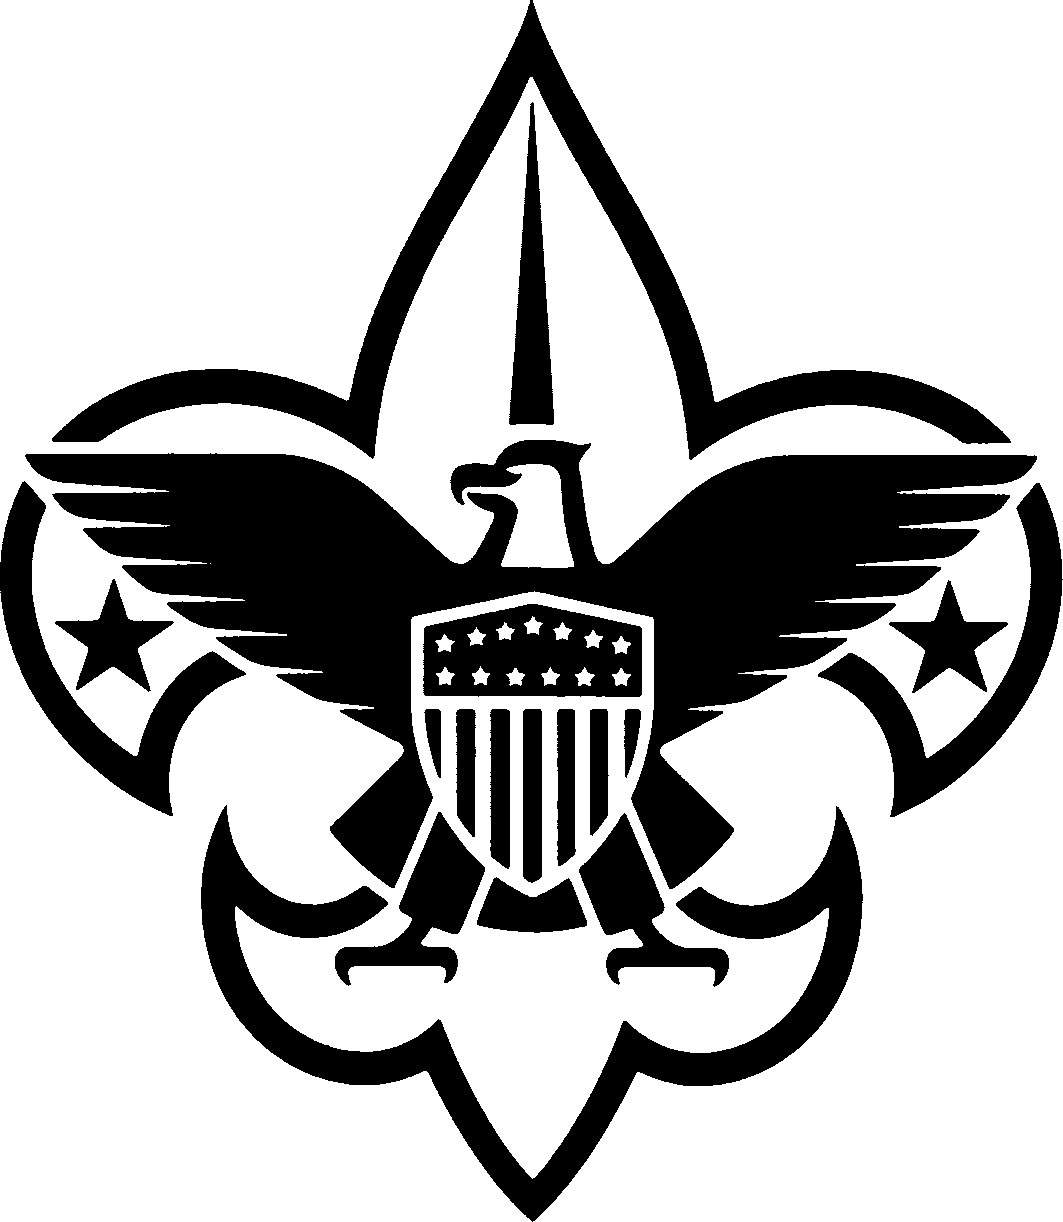 Free Boy Scout Logo Png, Download Free Boy Scout Logo Png png images ...